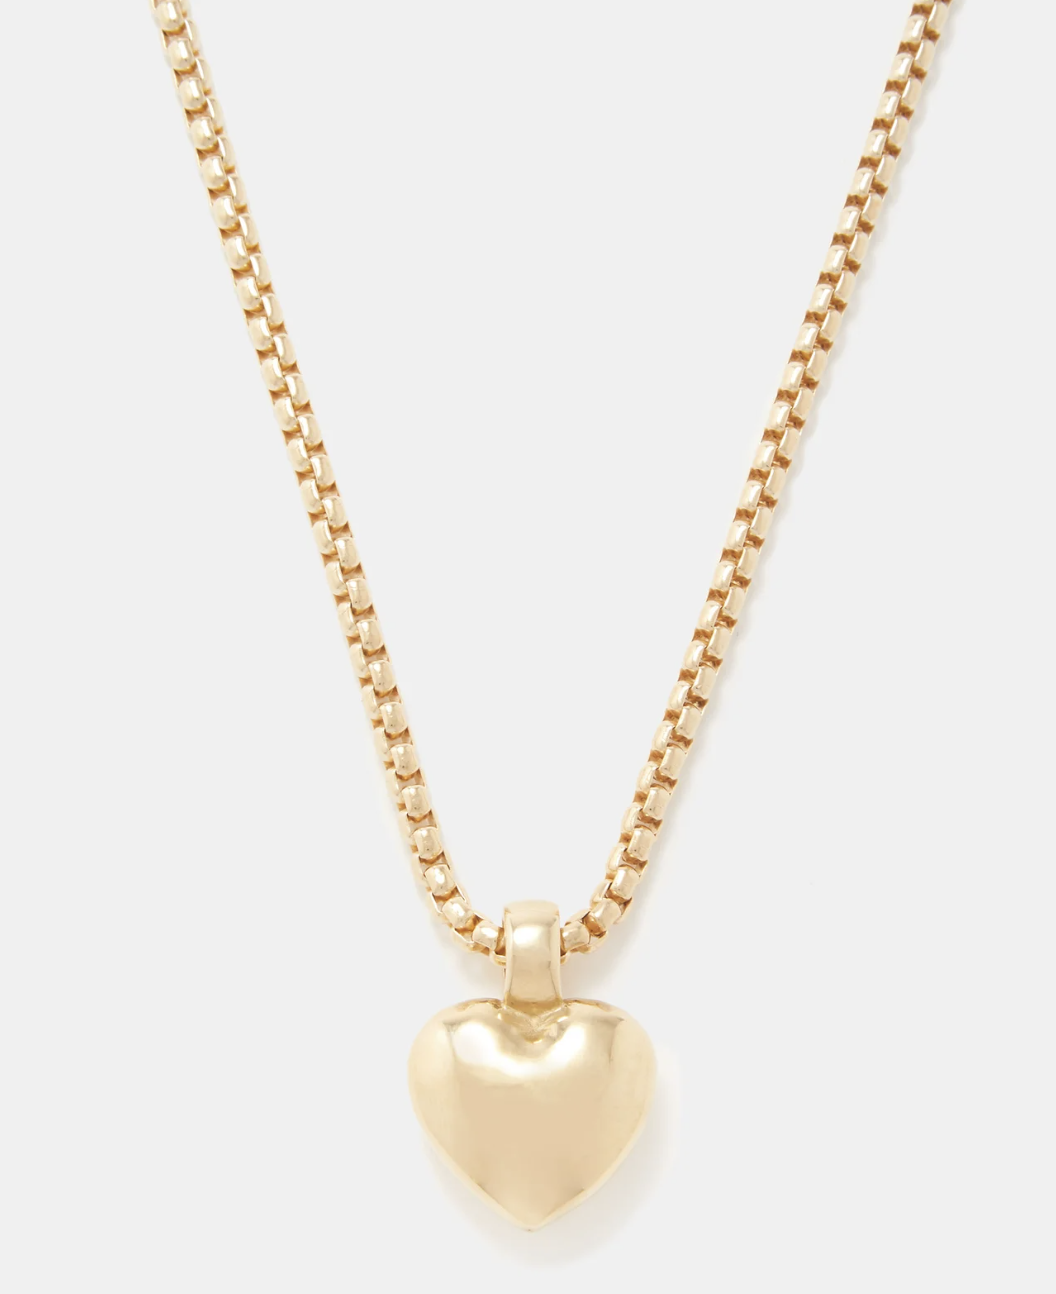 Laura Lombardi heart necklace